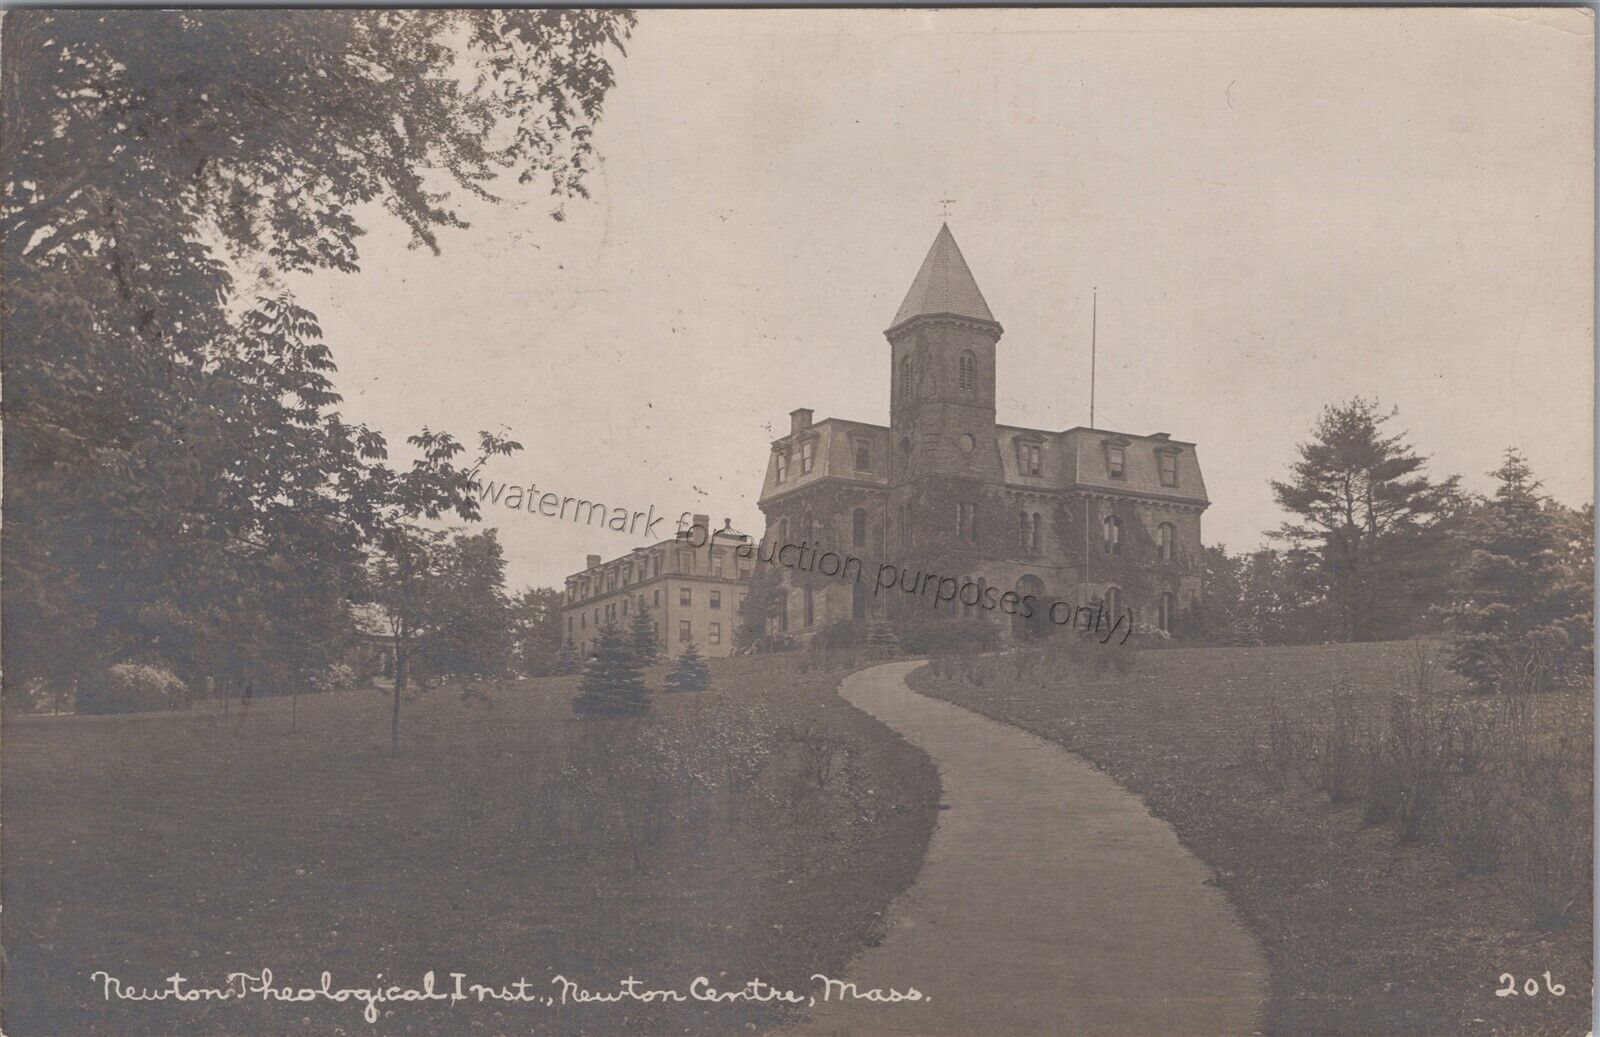 Newton Center MA: RPPC Newton Theological Institute, vintage Real Photo Postcard